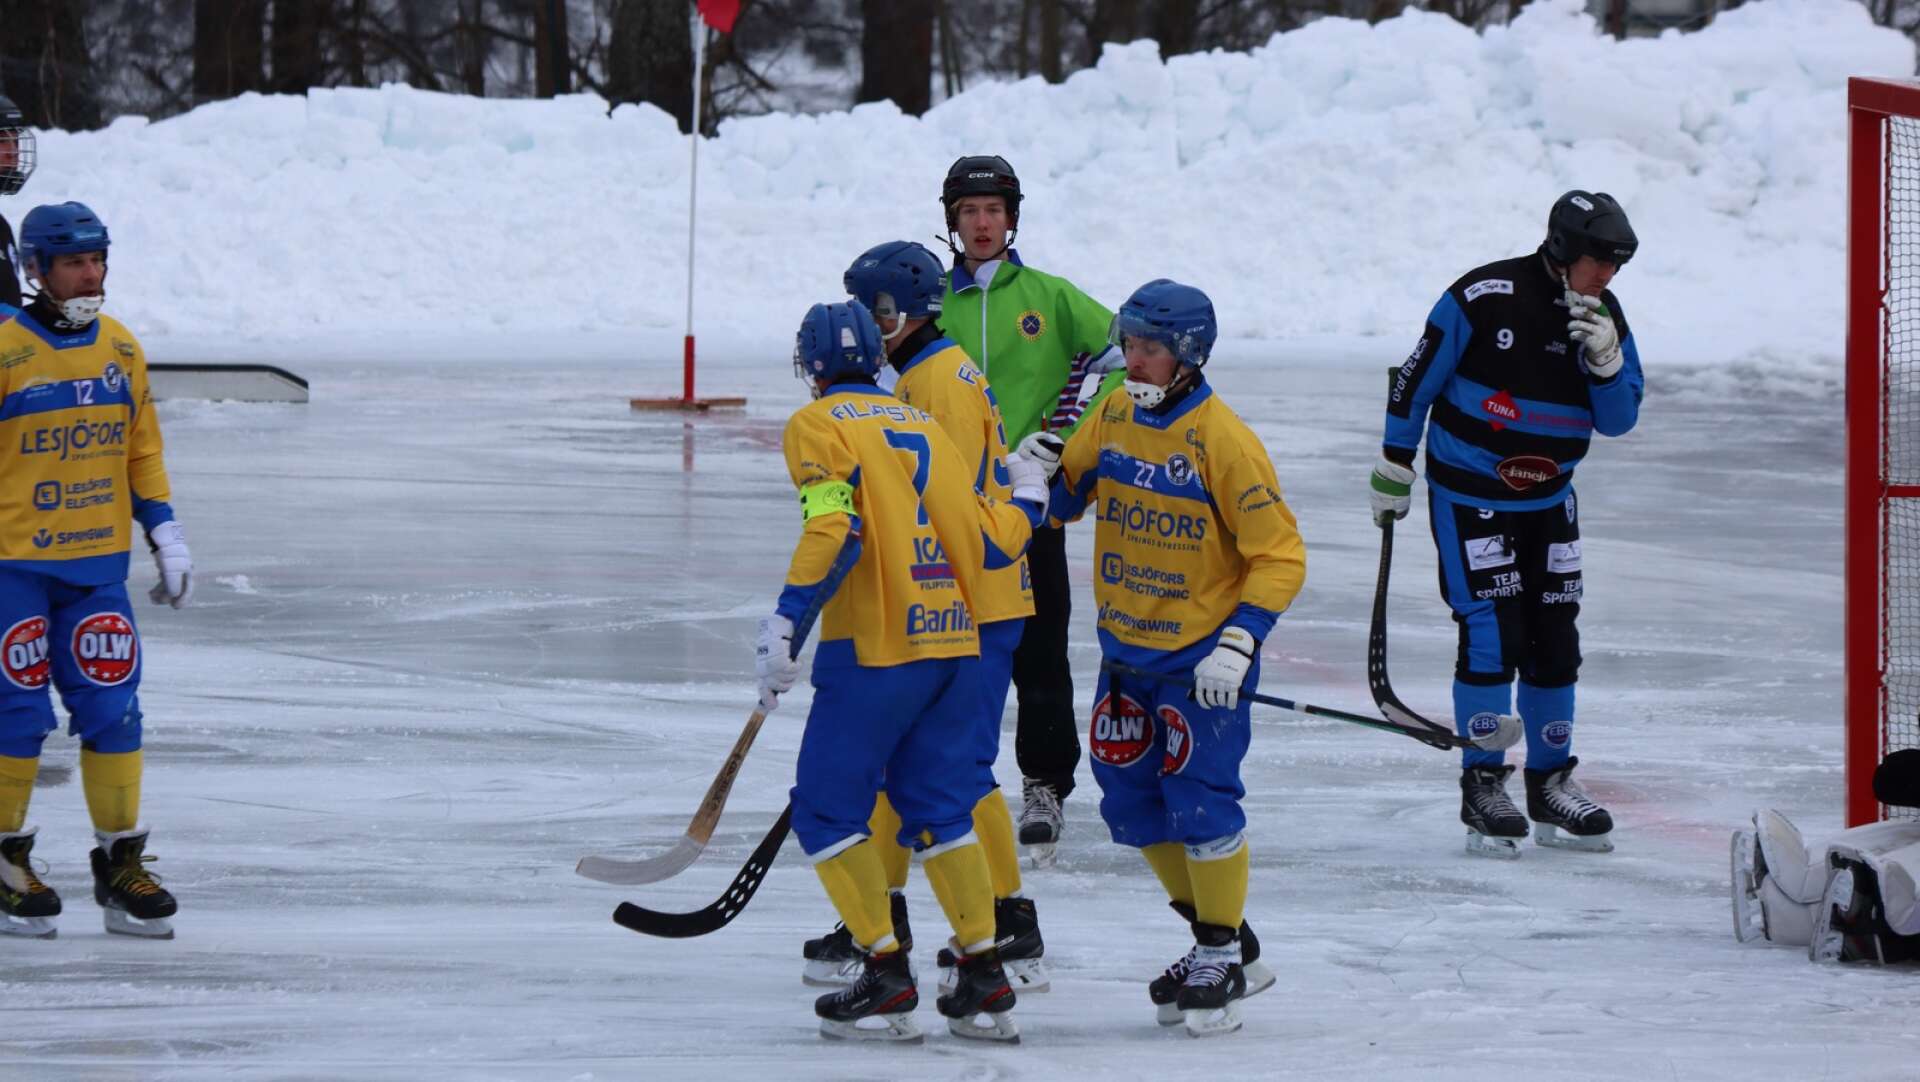 Lesjöfors/Filipstad bandy mötte eskilstuna på skogsryd